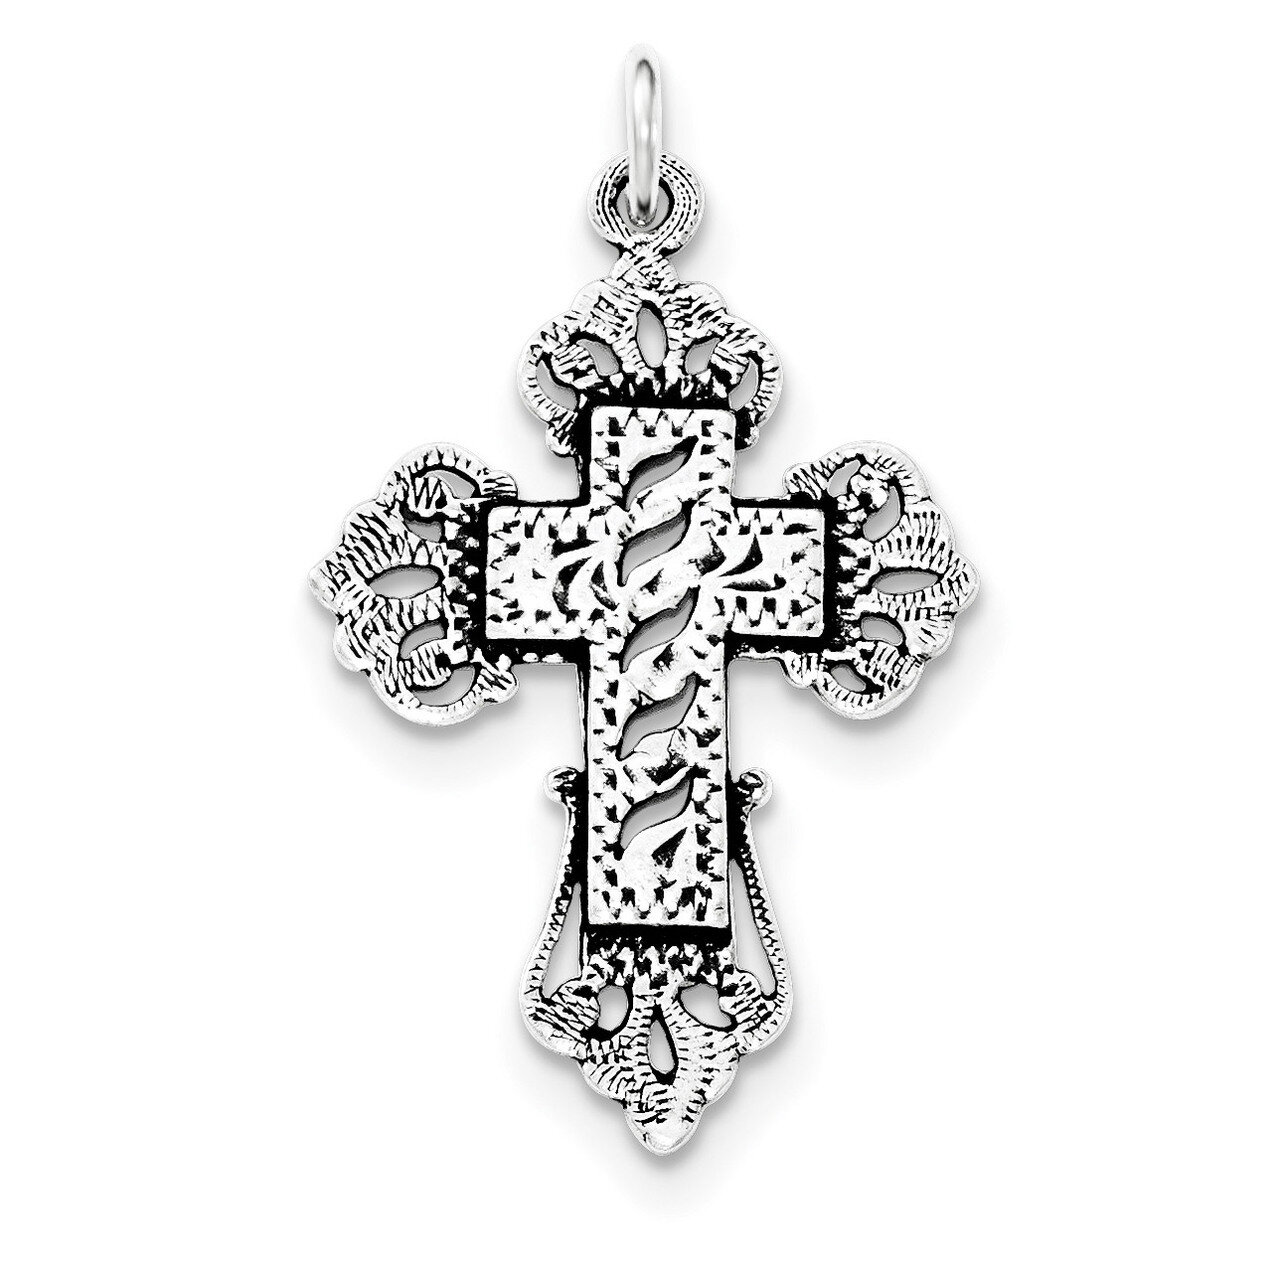 Antiqued & Textured Designed Edges Cross Pendant Sterling Silver QC8222